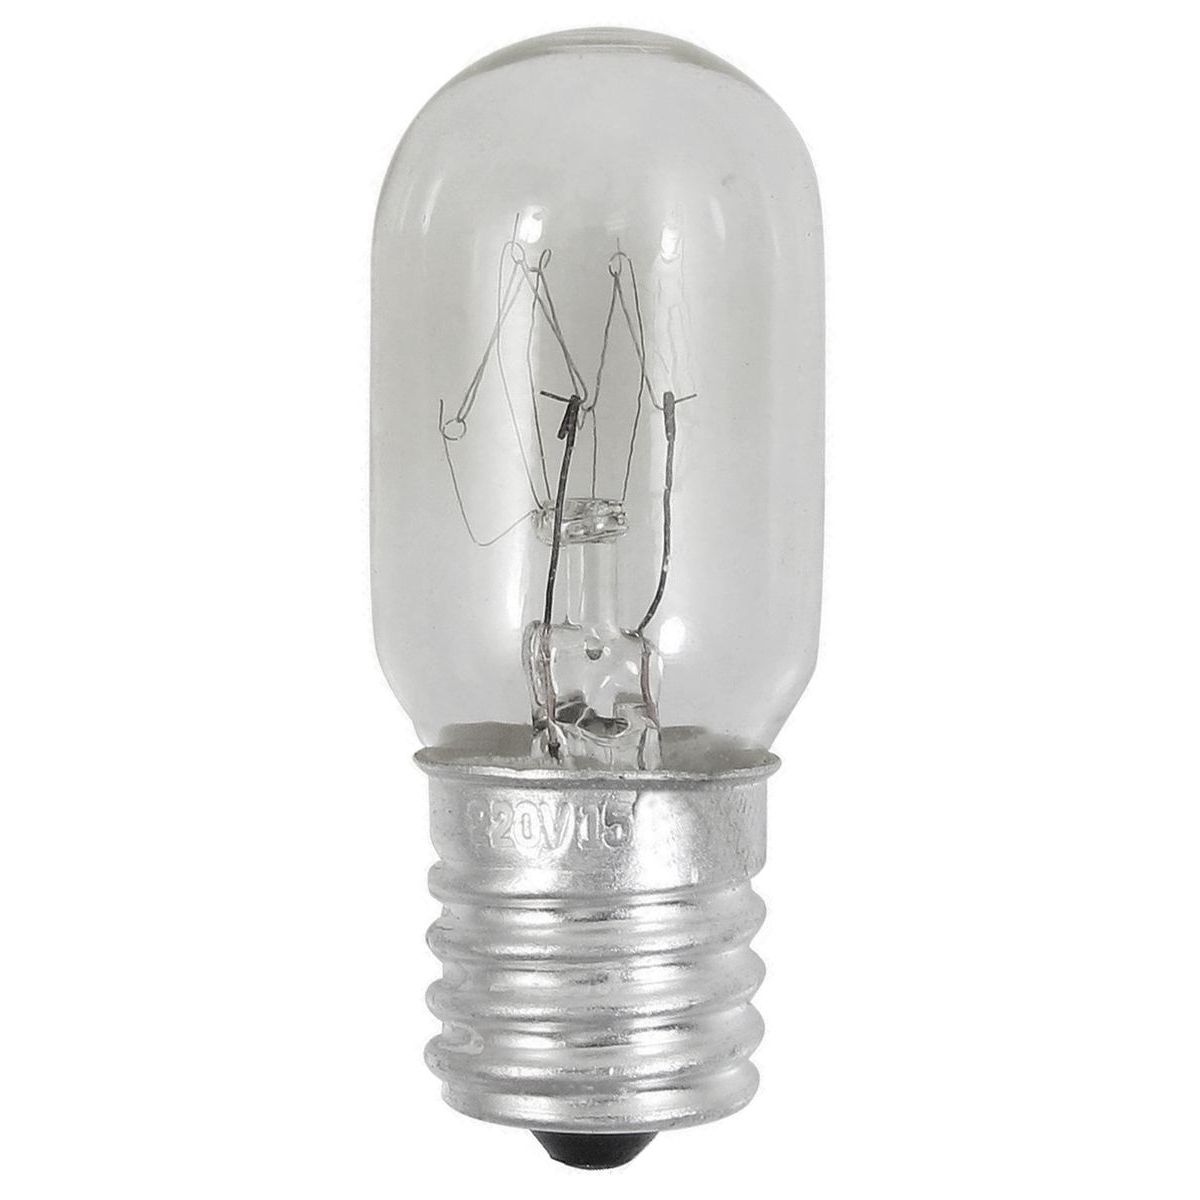 OUTIFRANCE 1 ampoule frigo 80 lumen 15W - A vis E14